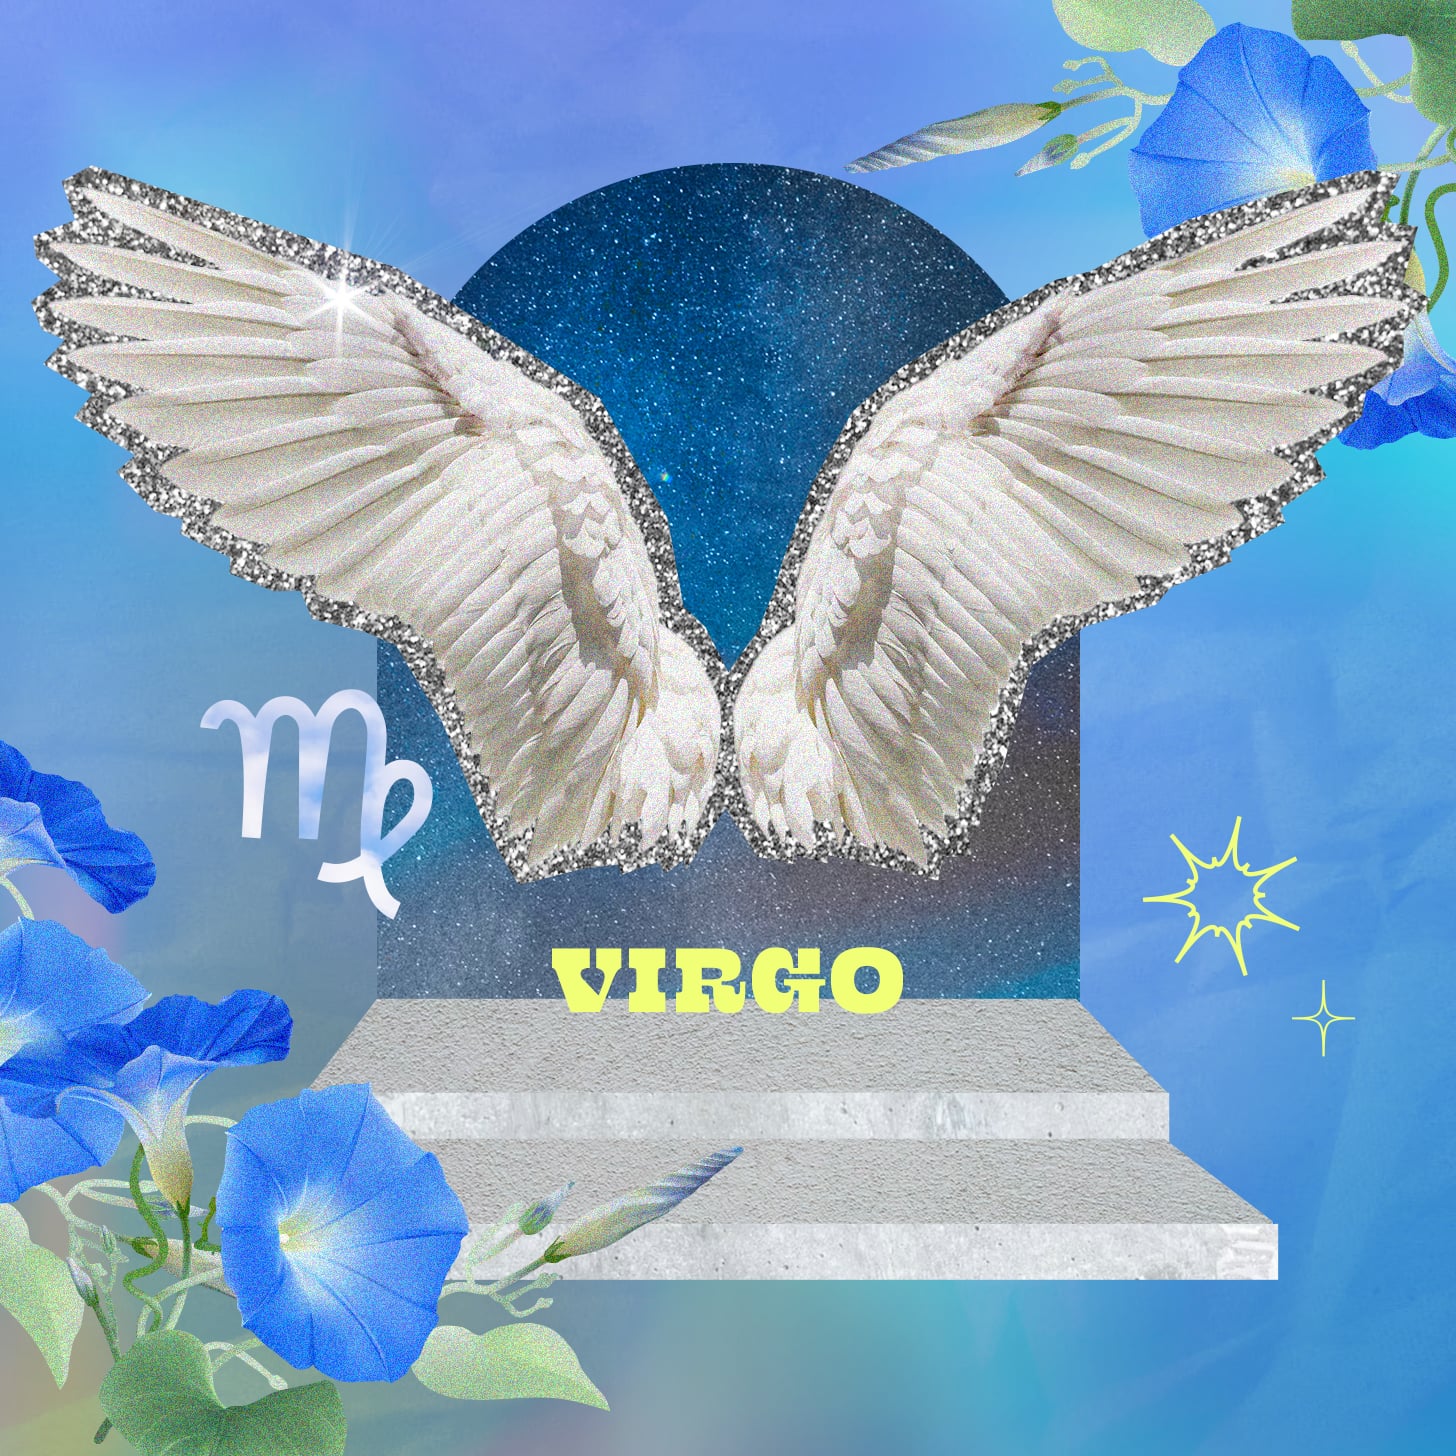 Virgo weekly horoscope for Nov. 27, 2022